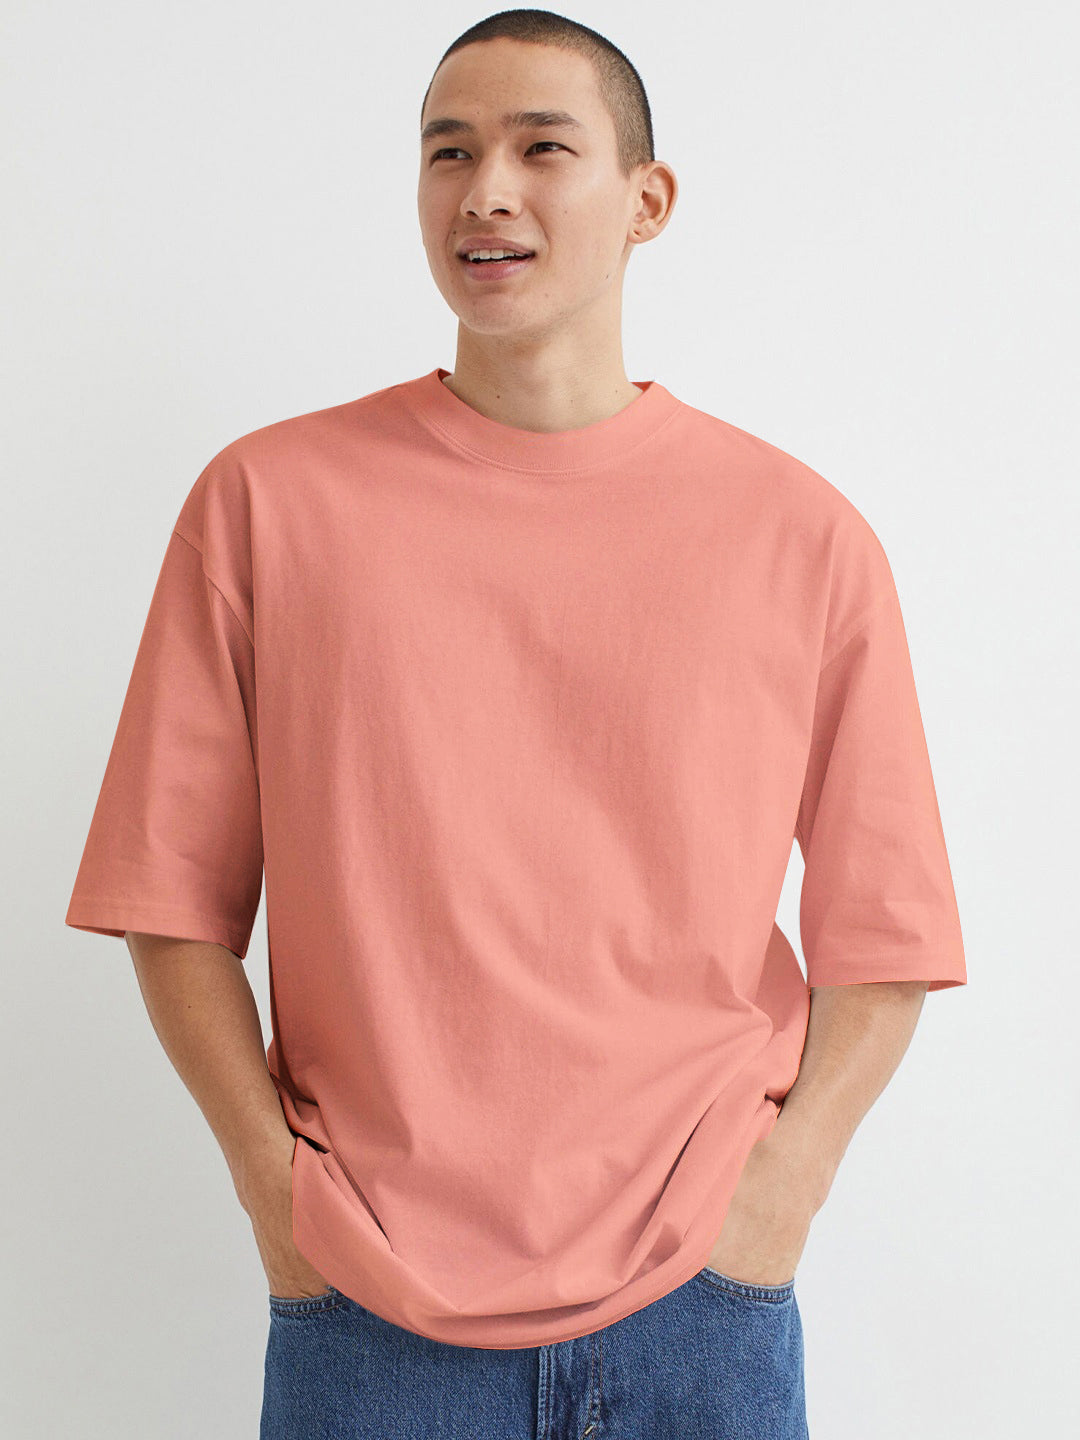 Peach Oversize Tshirt Front